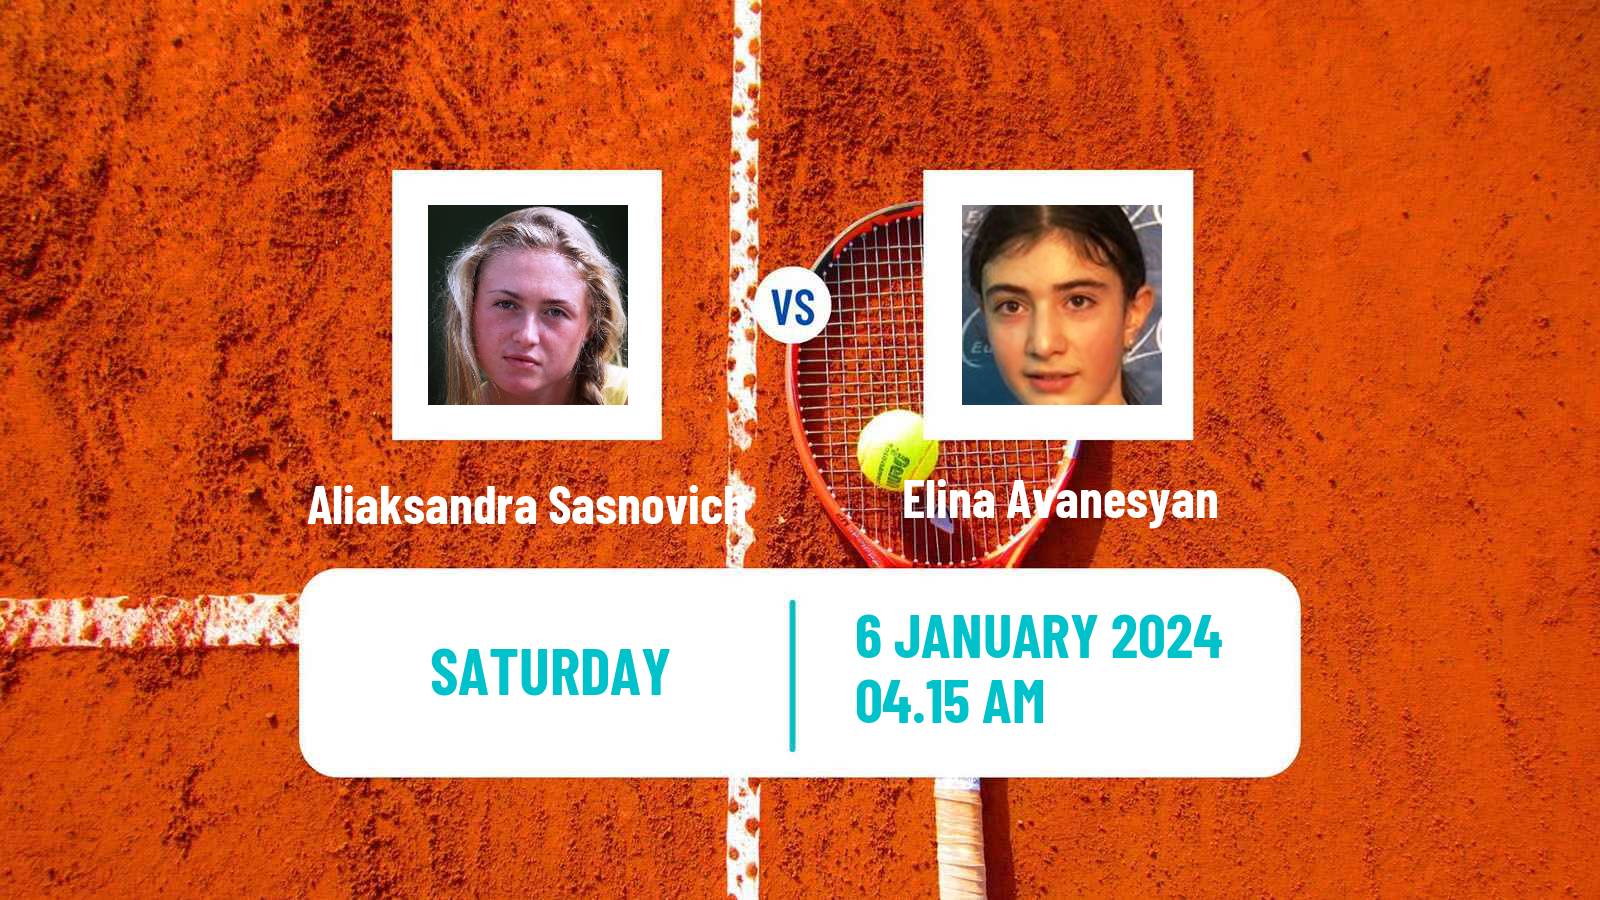 Tennis WTA Adelaide Aliaksandra Sasnovich - Elina Avanesyan